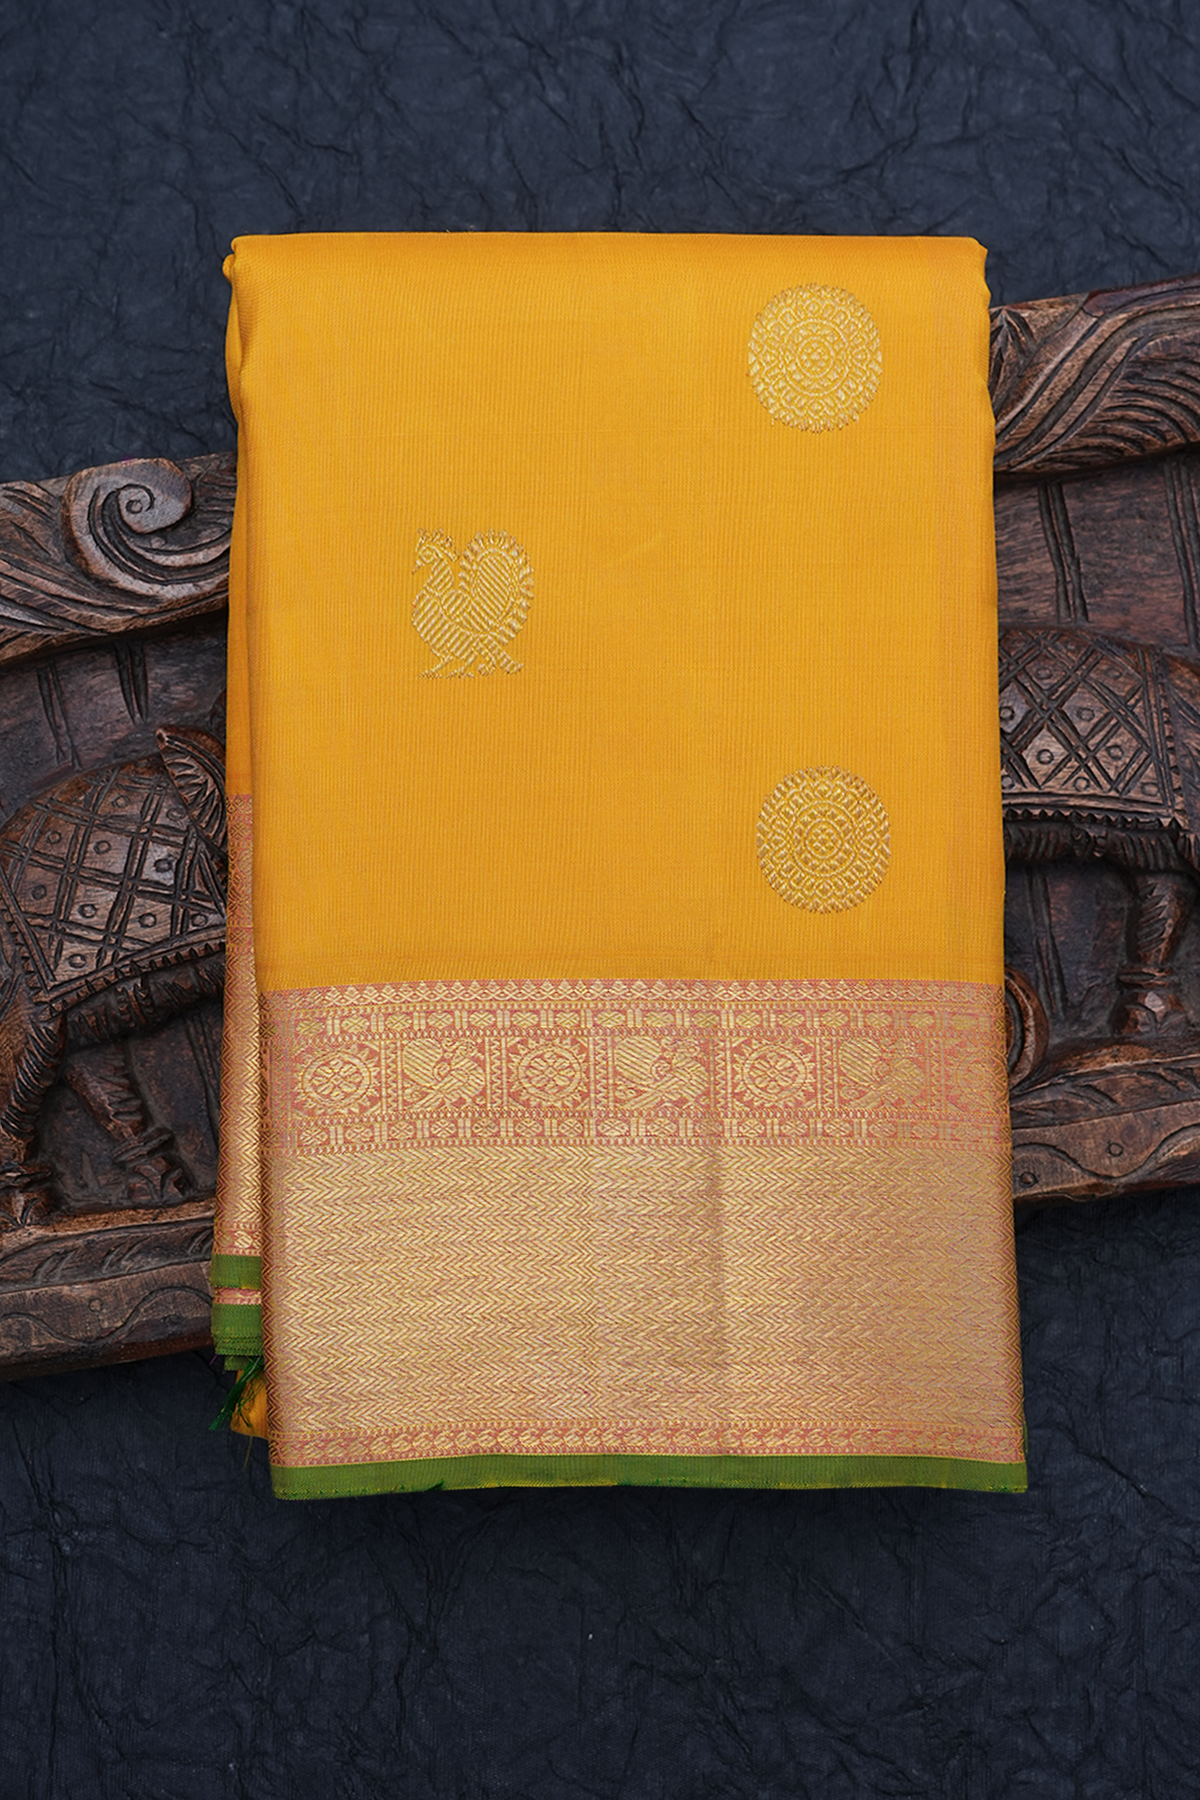 Peacock Chakram Motifs Mustard Yellow Kanchipuram Silk Saree